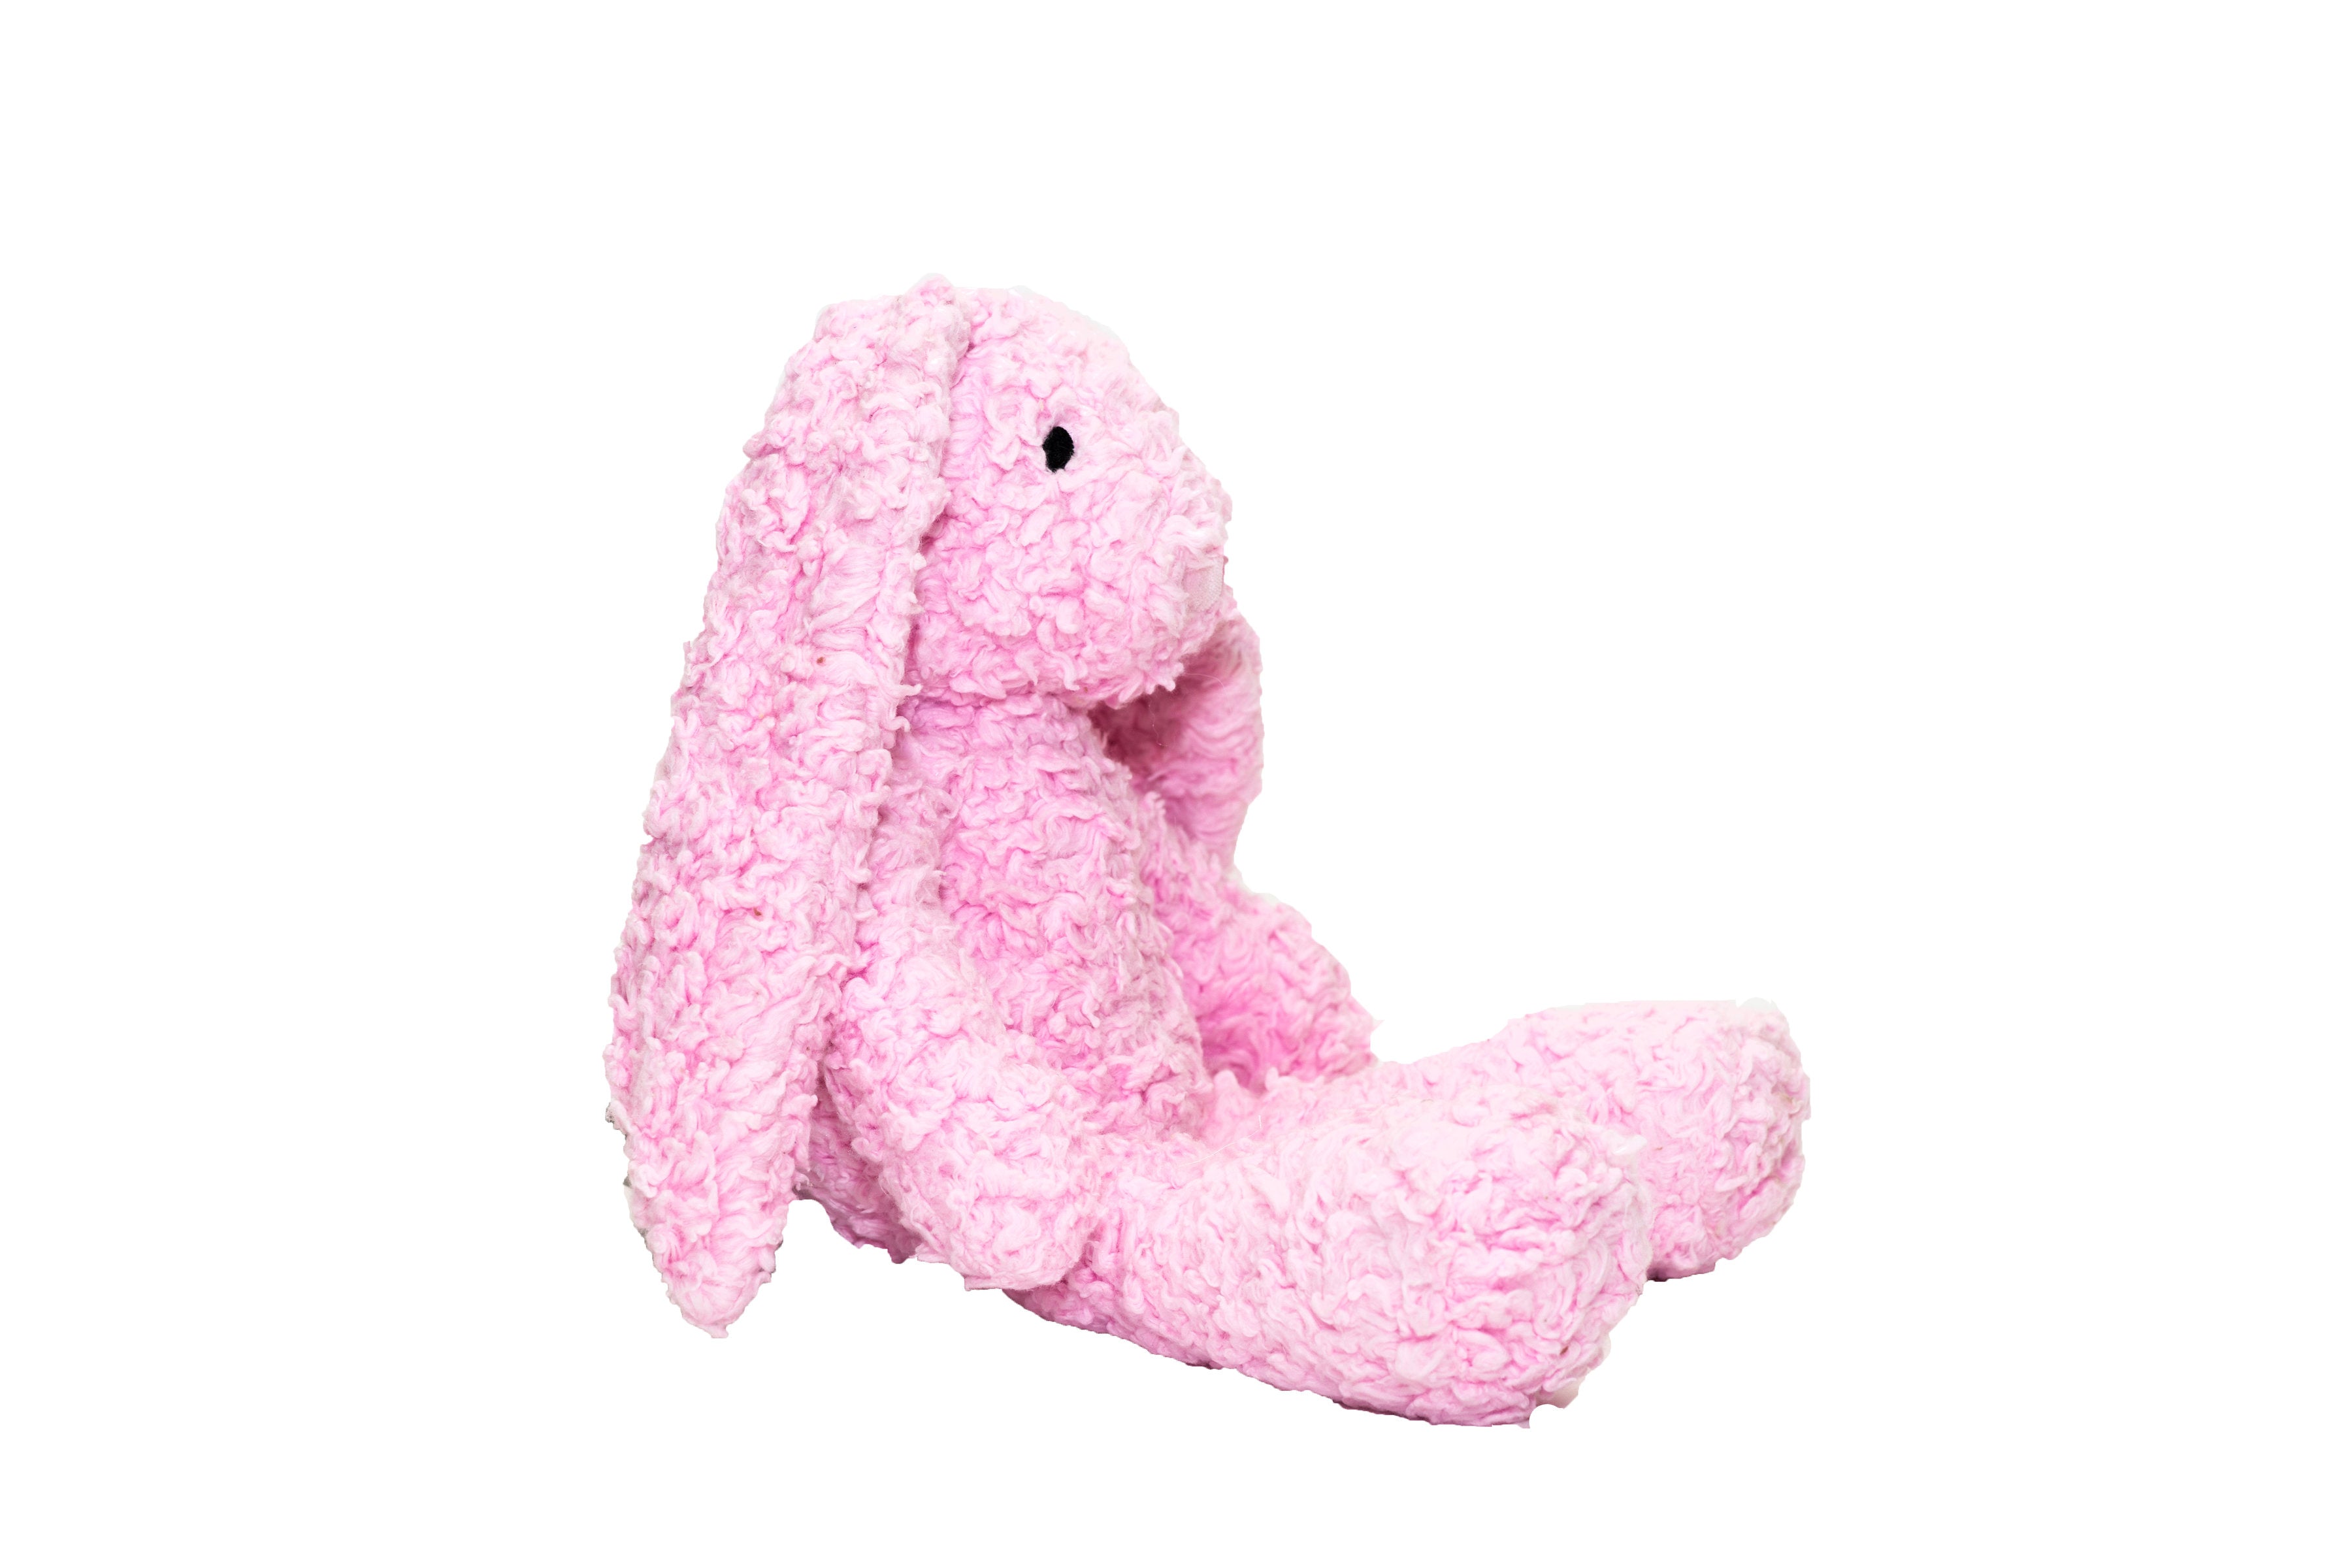 pink rabbit teddy